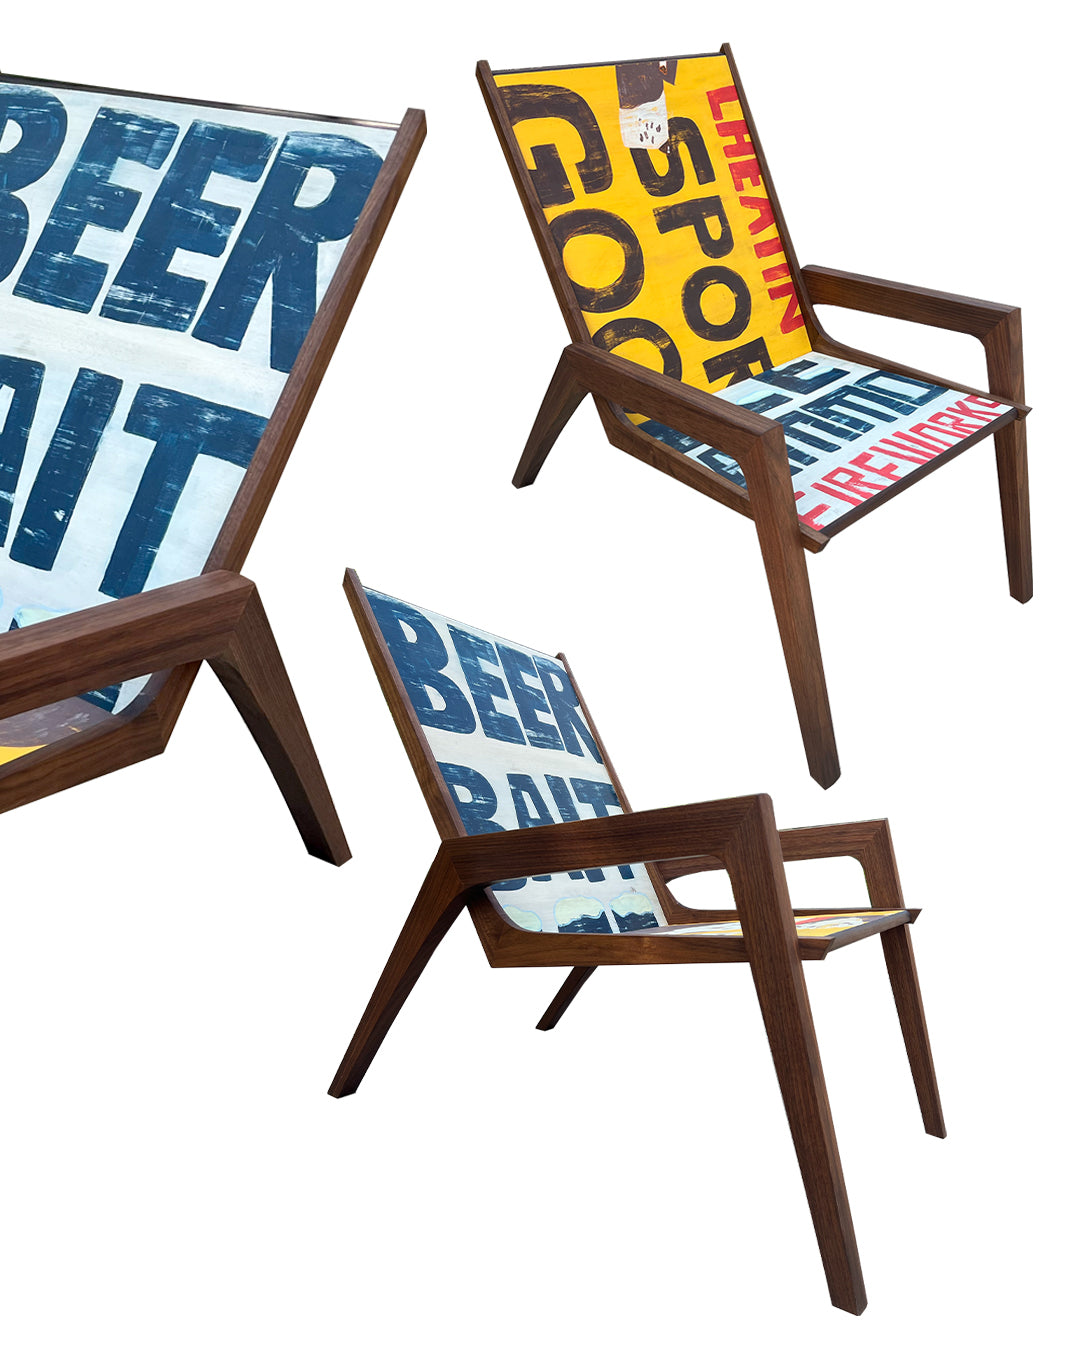 Pickerel Lounge Chairs